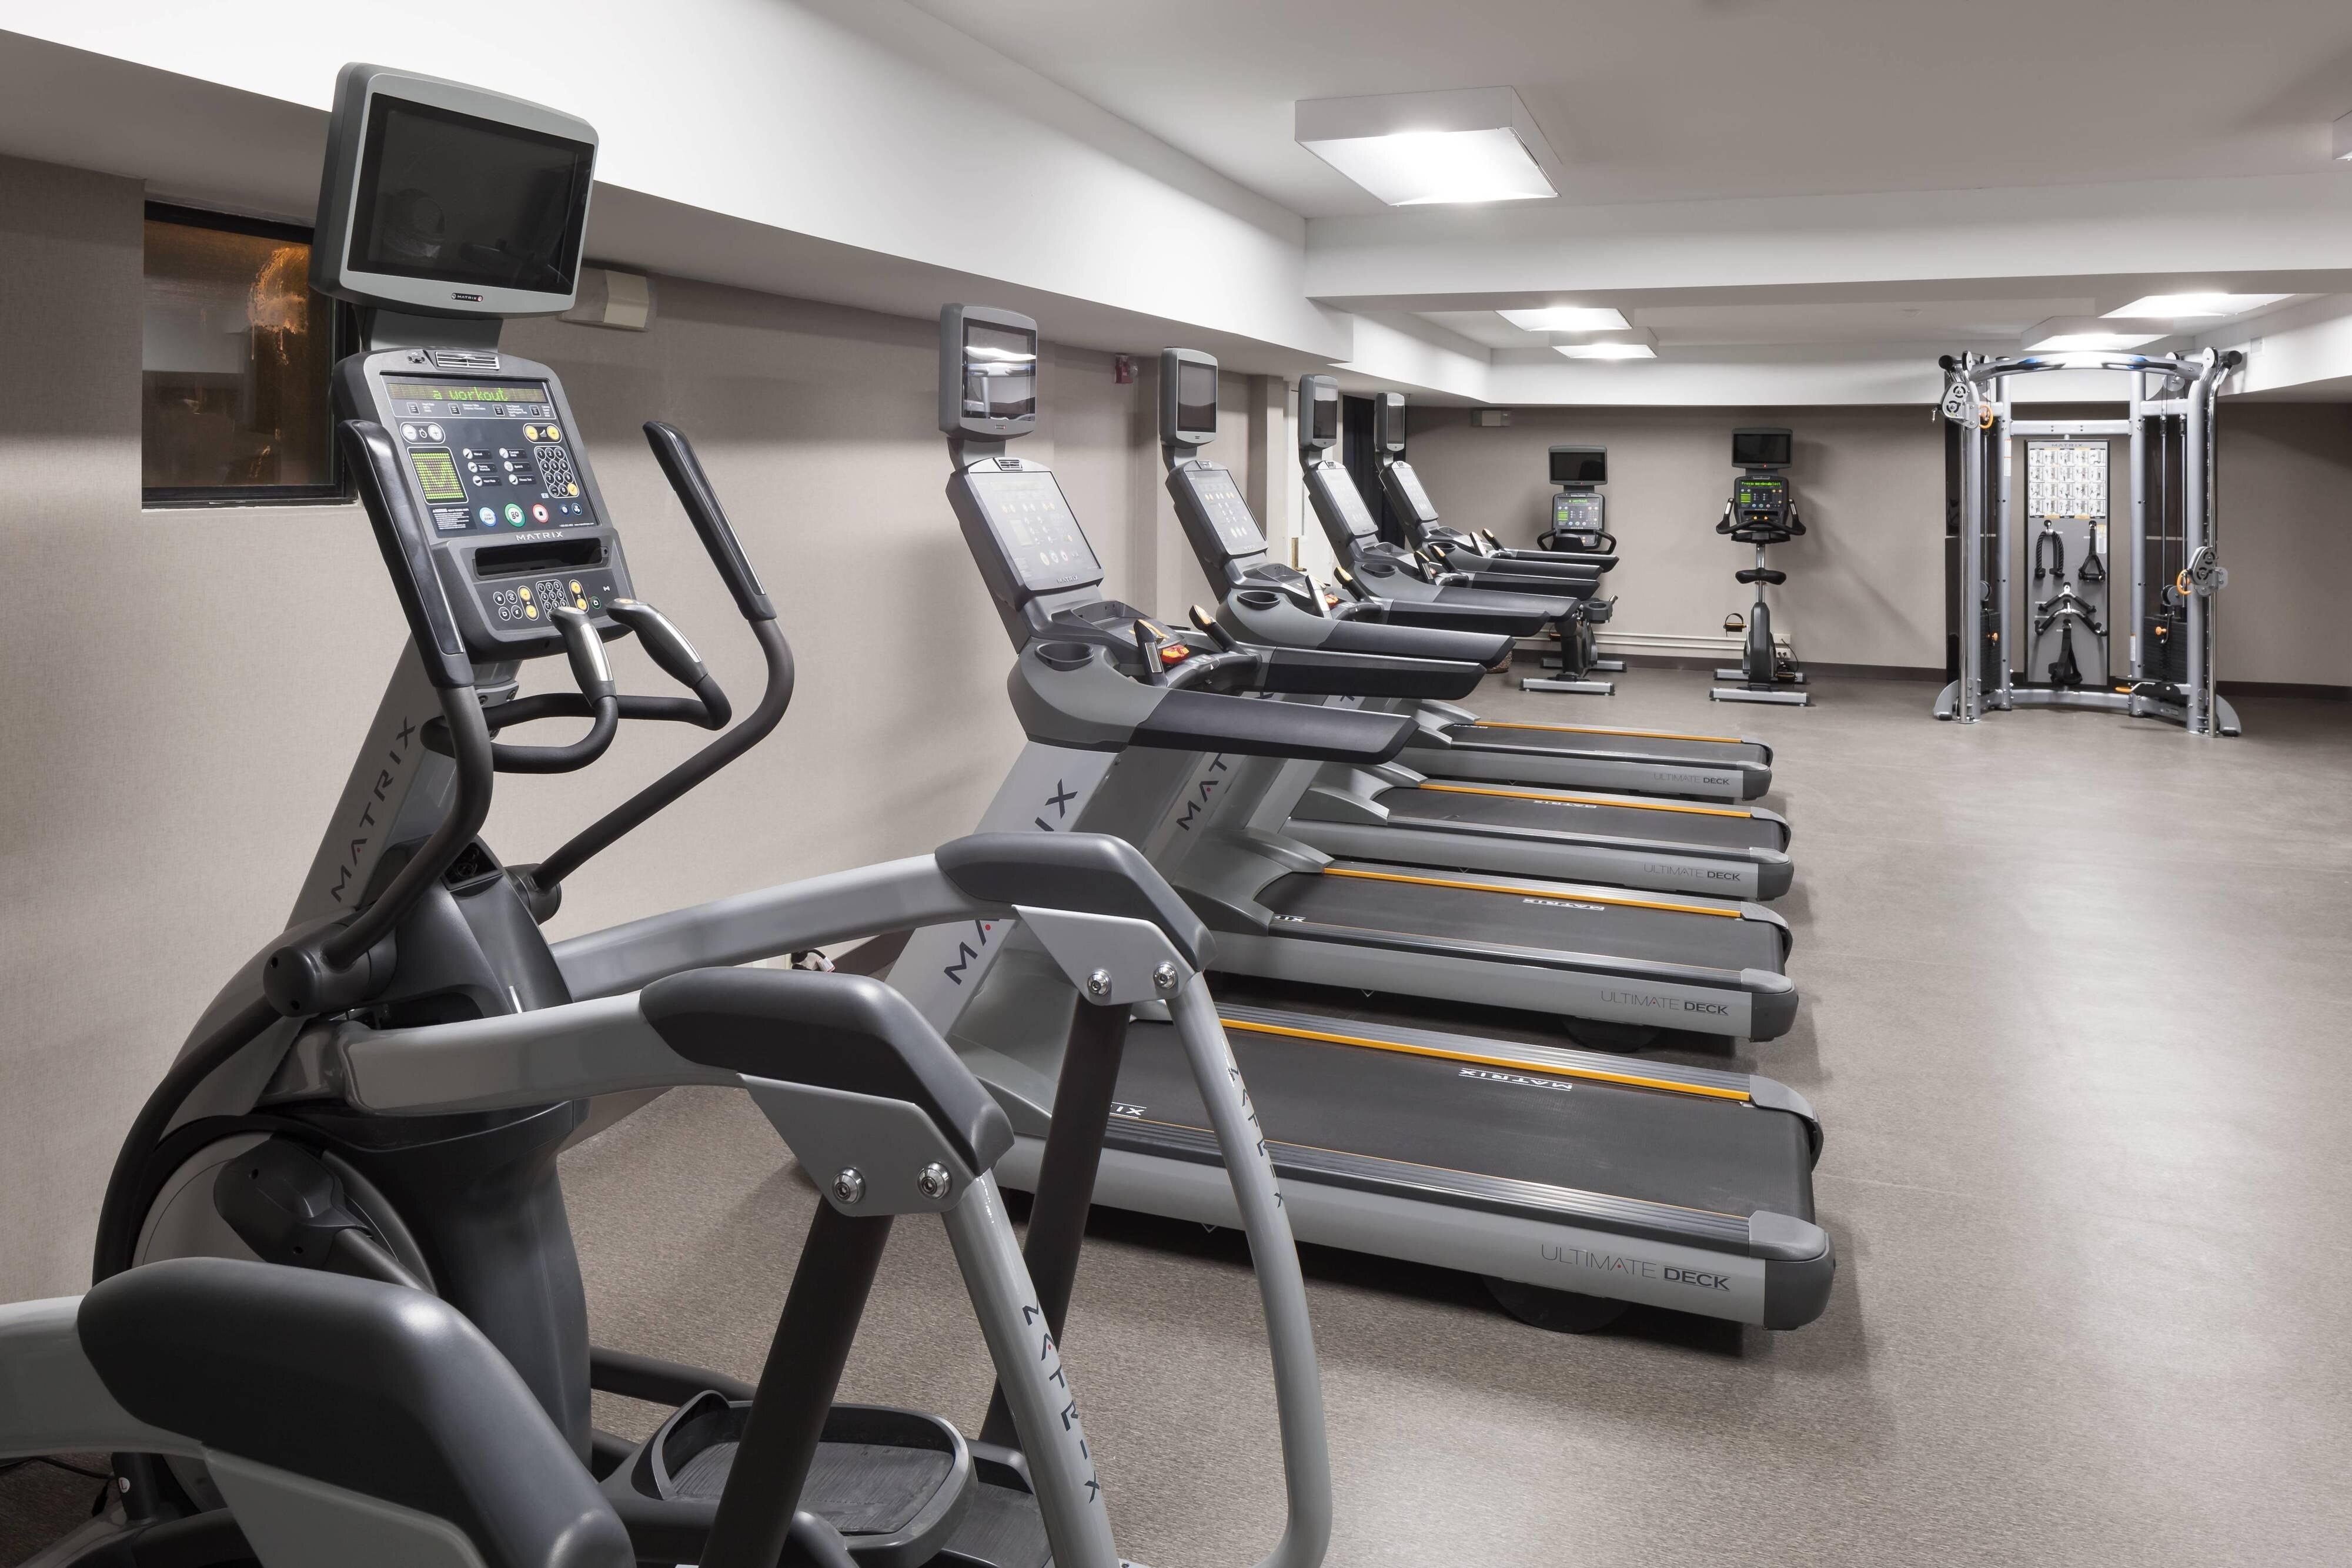 Fitness Center - Cardio Machines